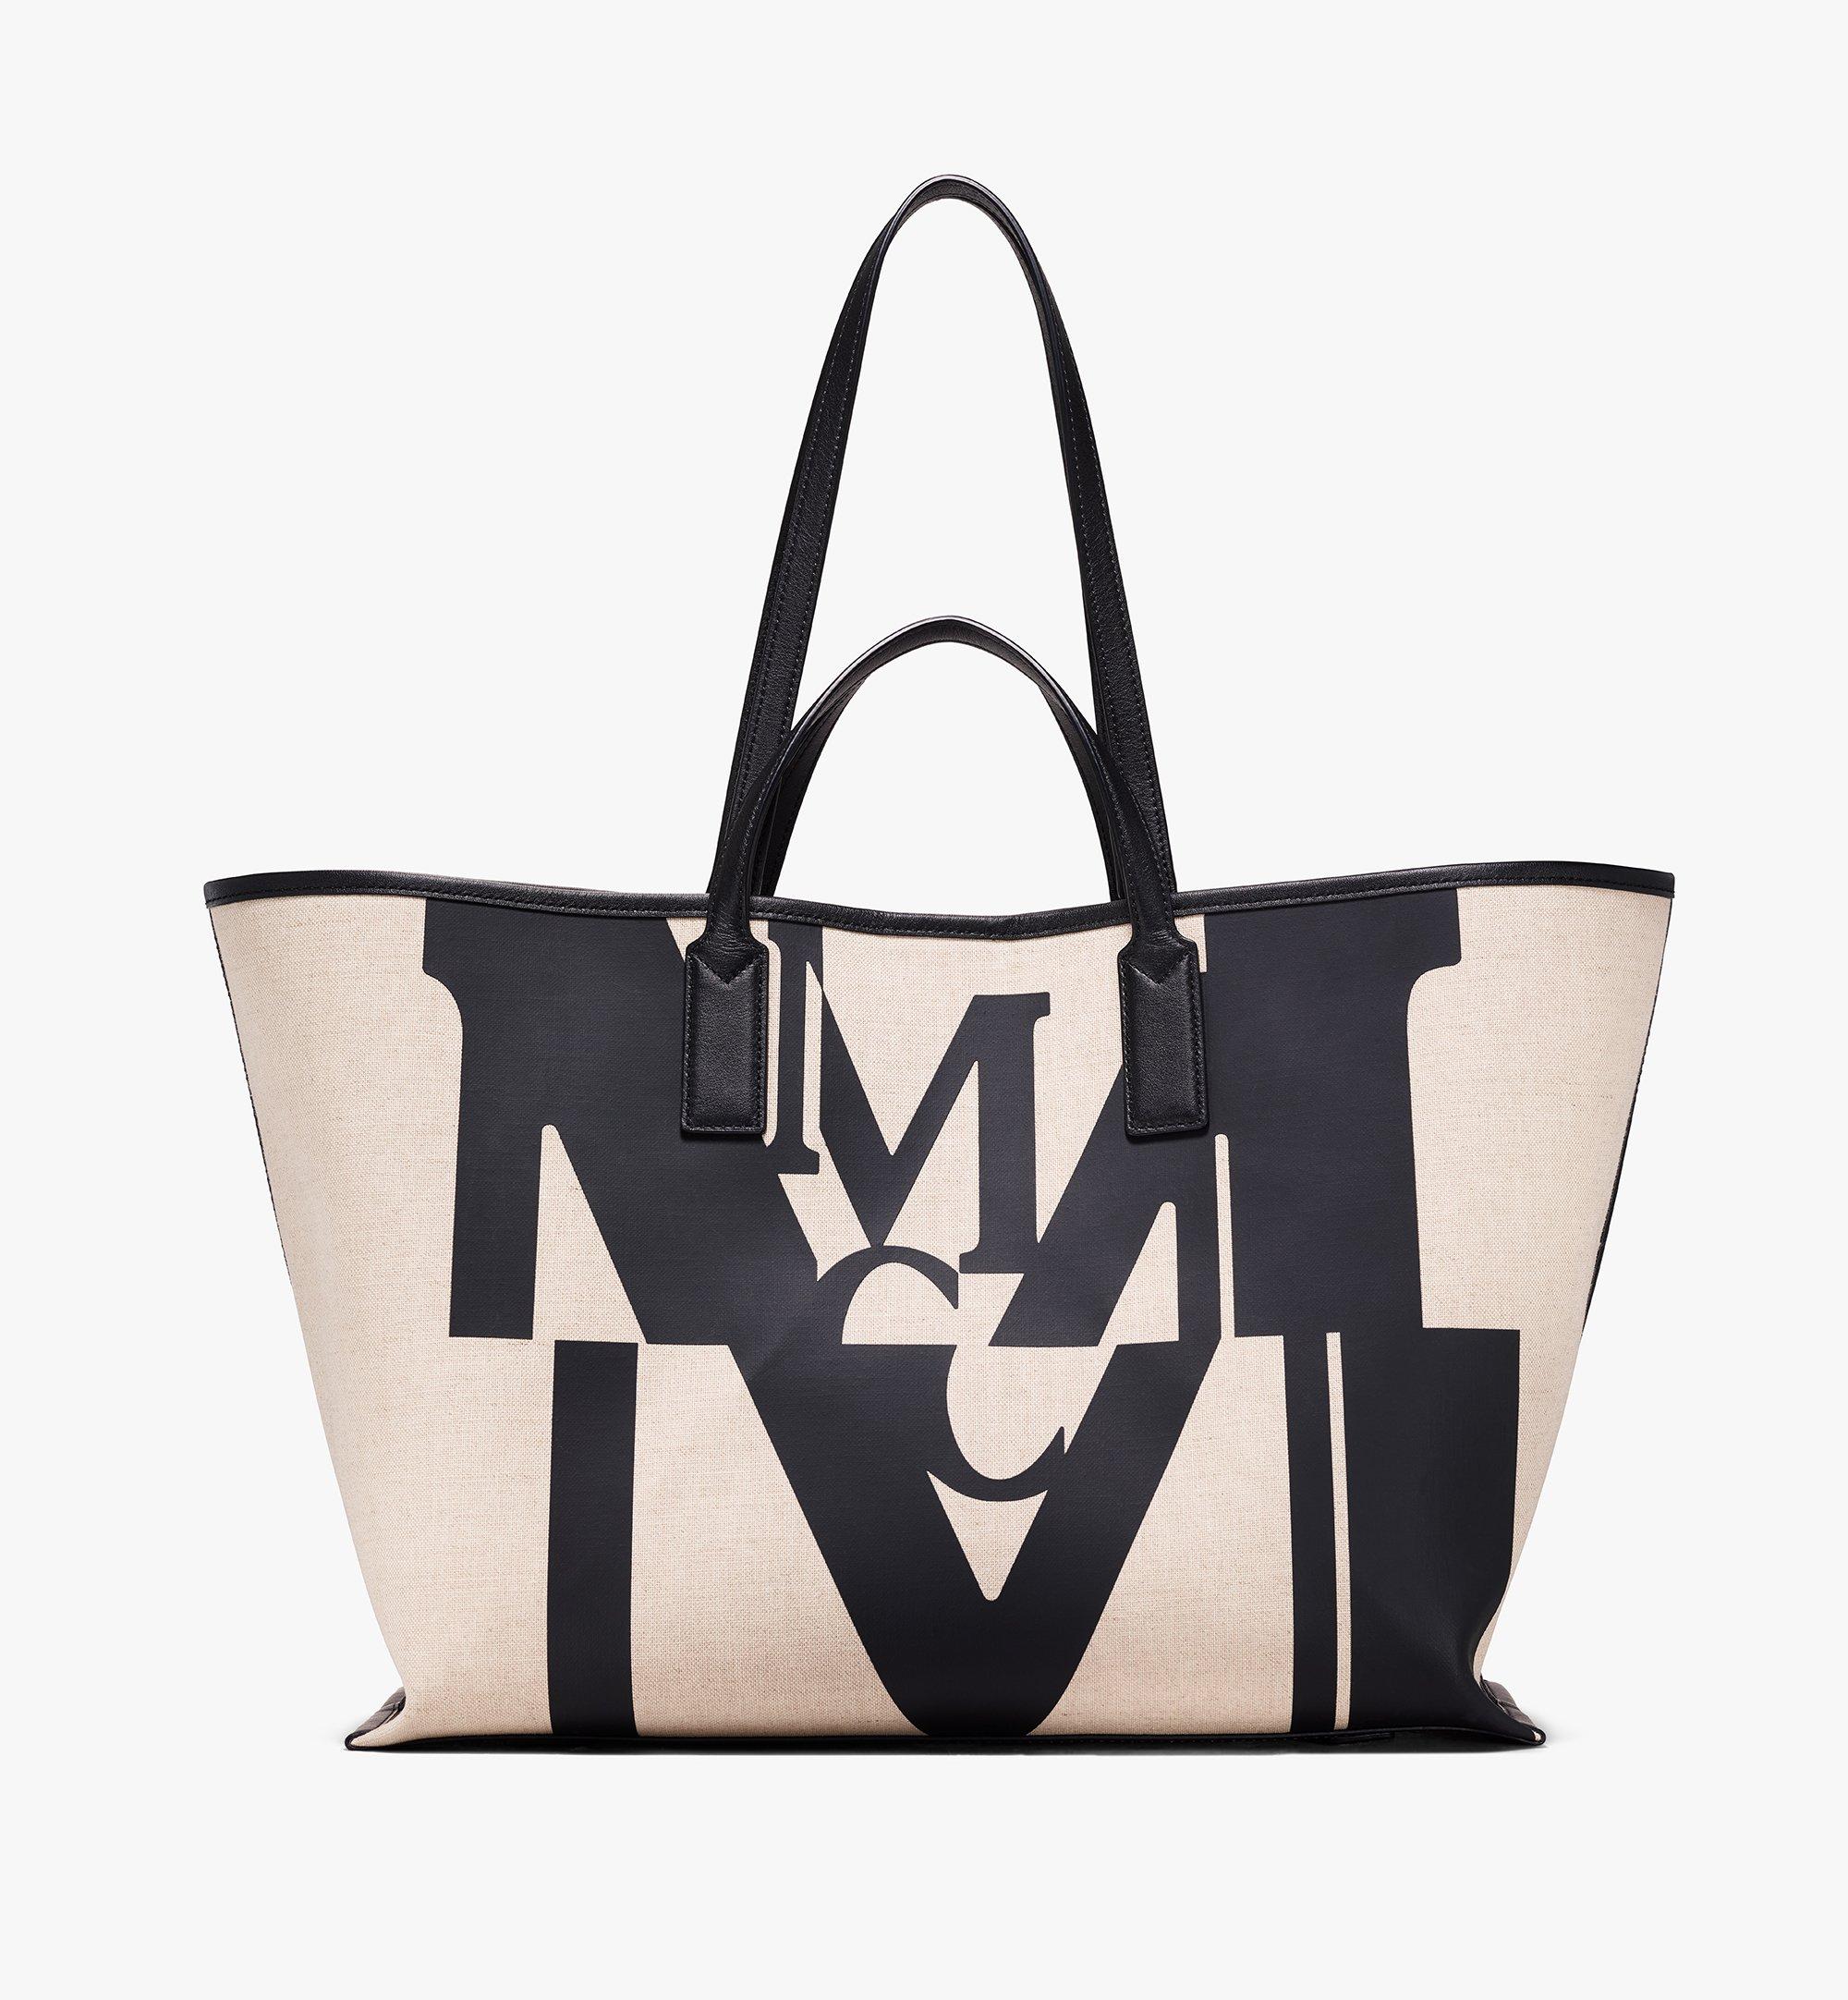 Mcm Transparent/Black PVC and Leather Glitch Logo Shopper Tote